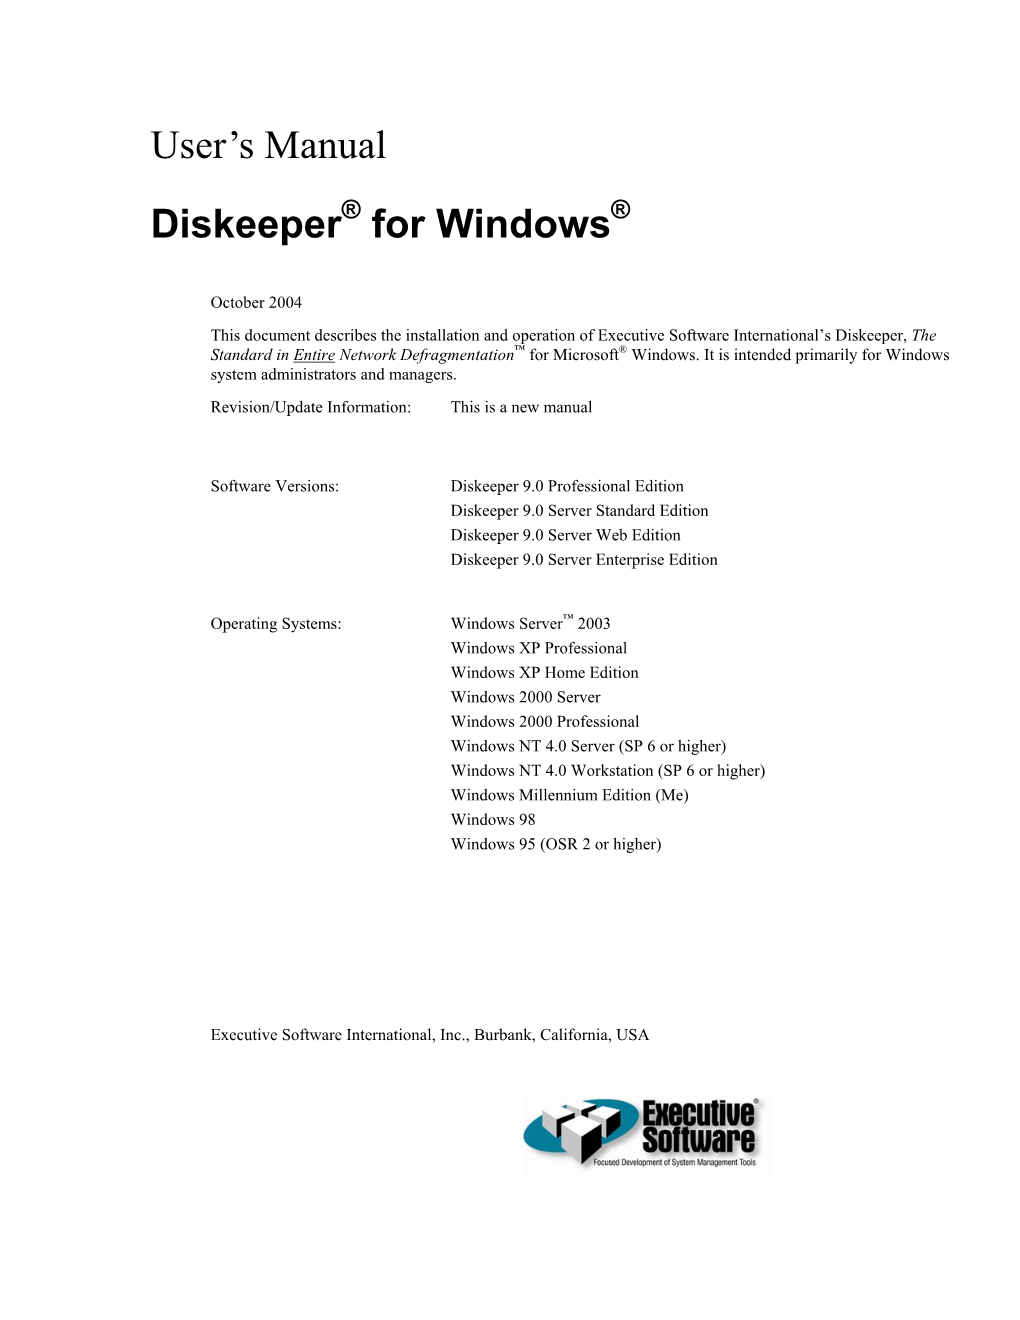 Diskeeper 9 User's Manual